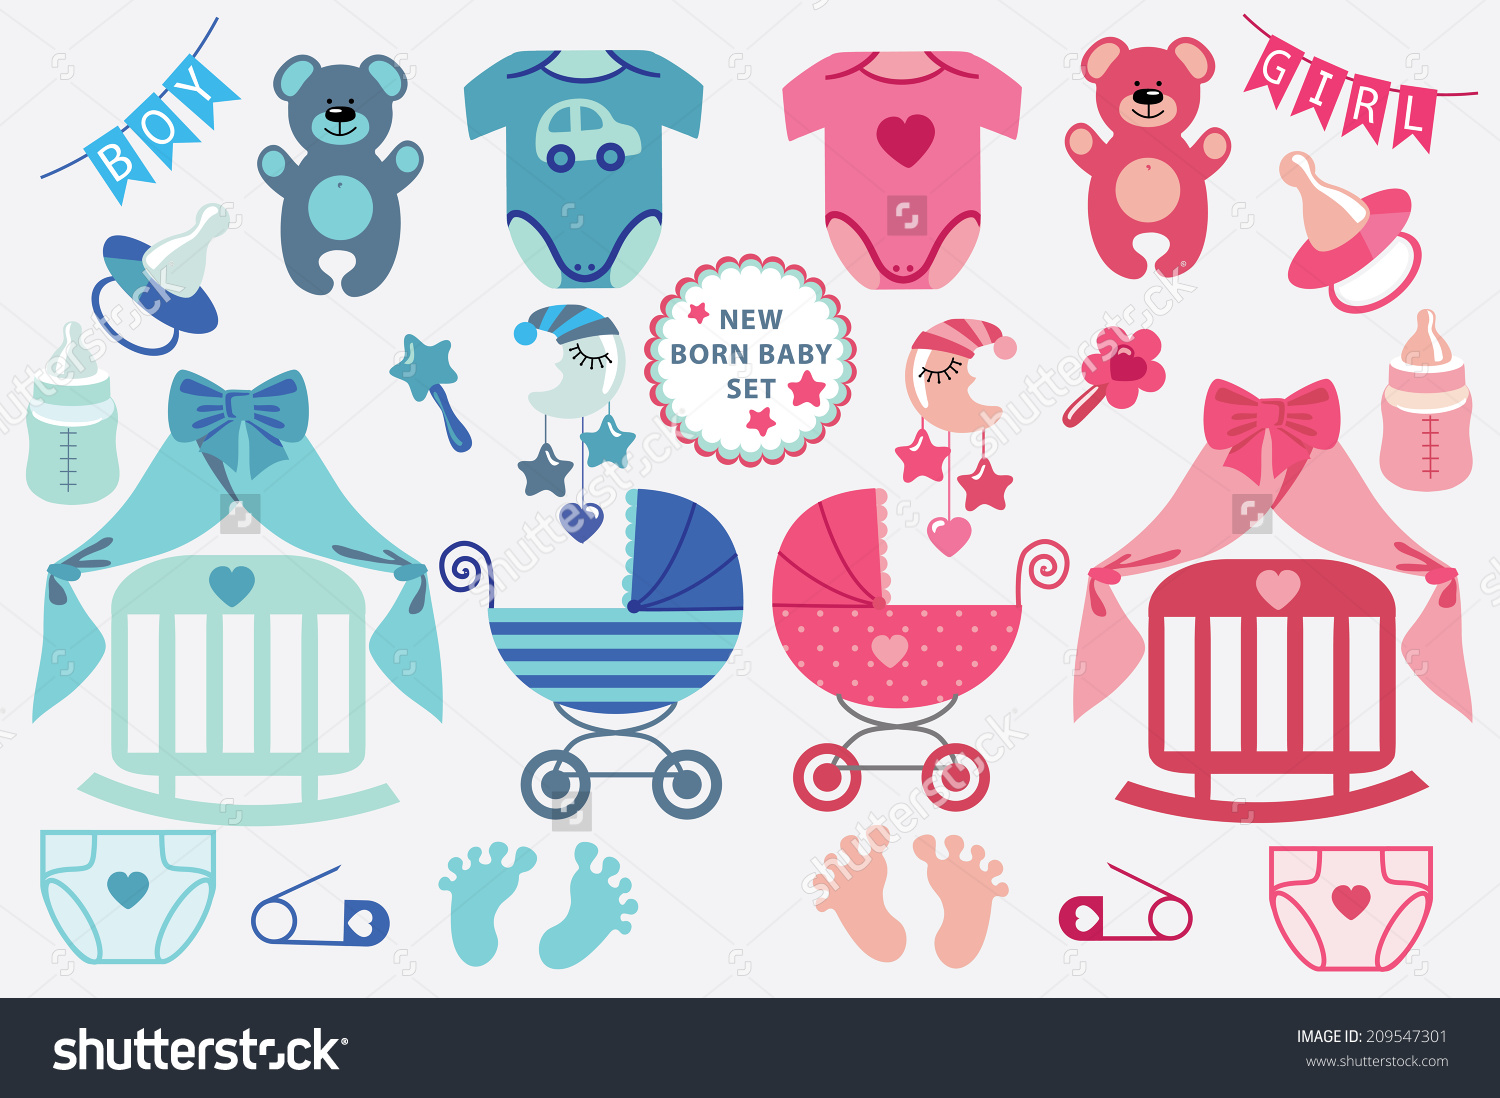 Set Cute Cartoon Cliparts Newborn Baby Stock Vector 209547301.